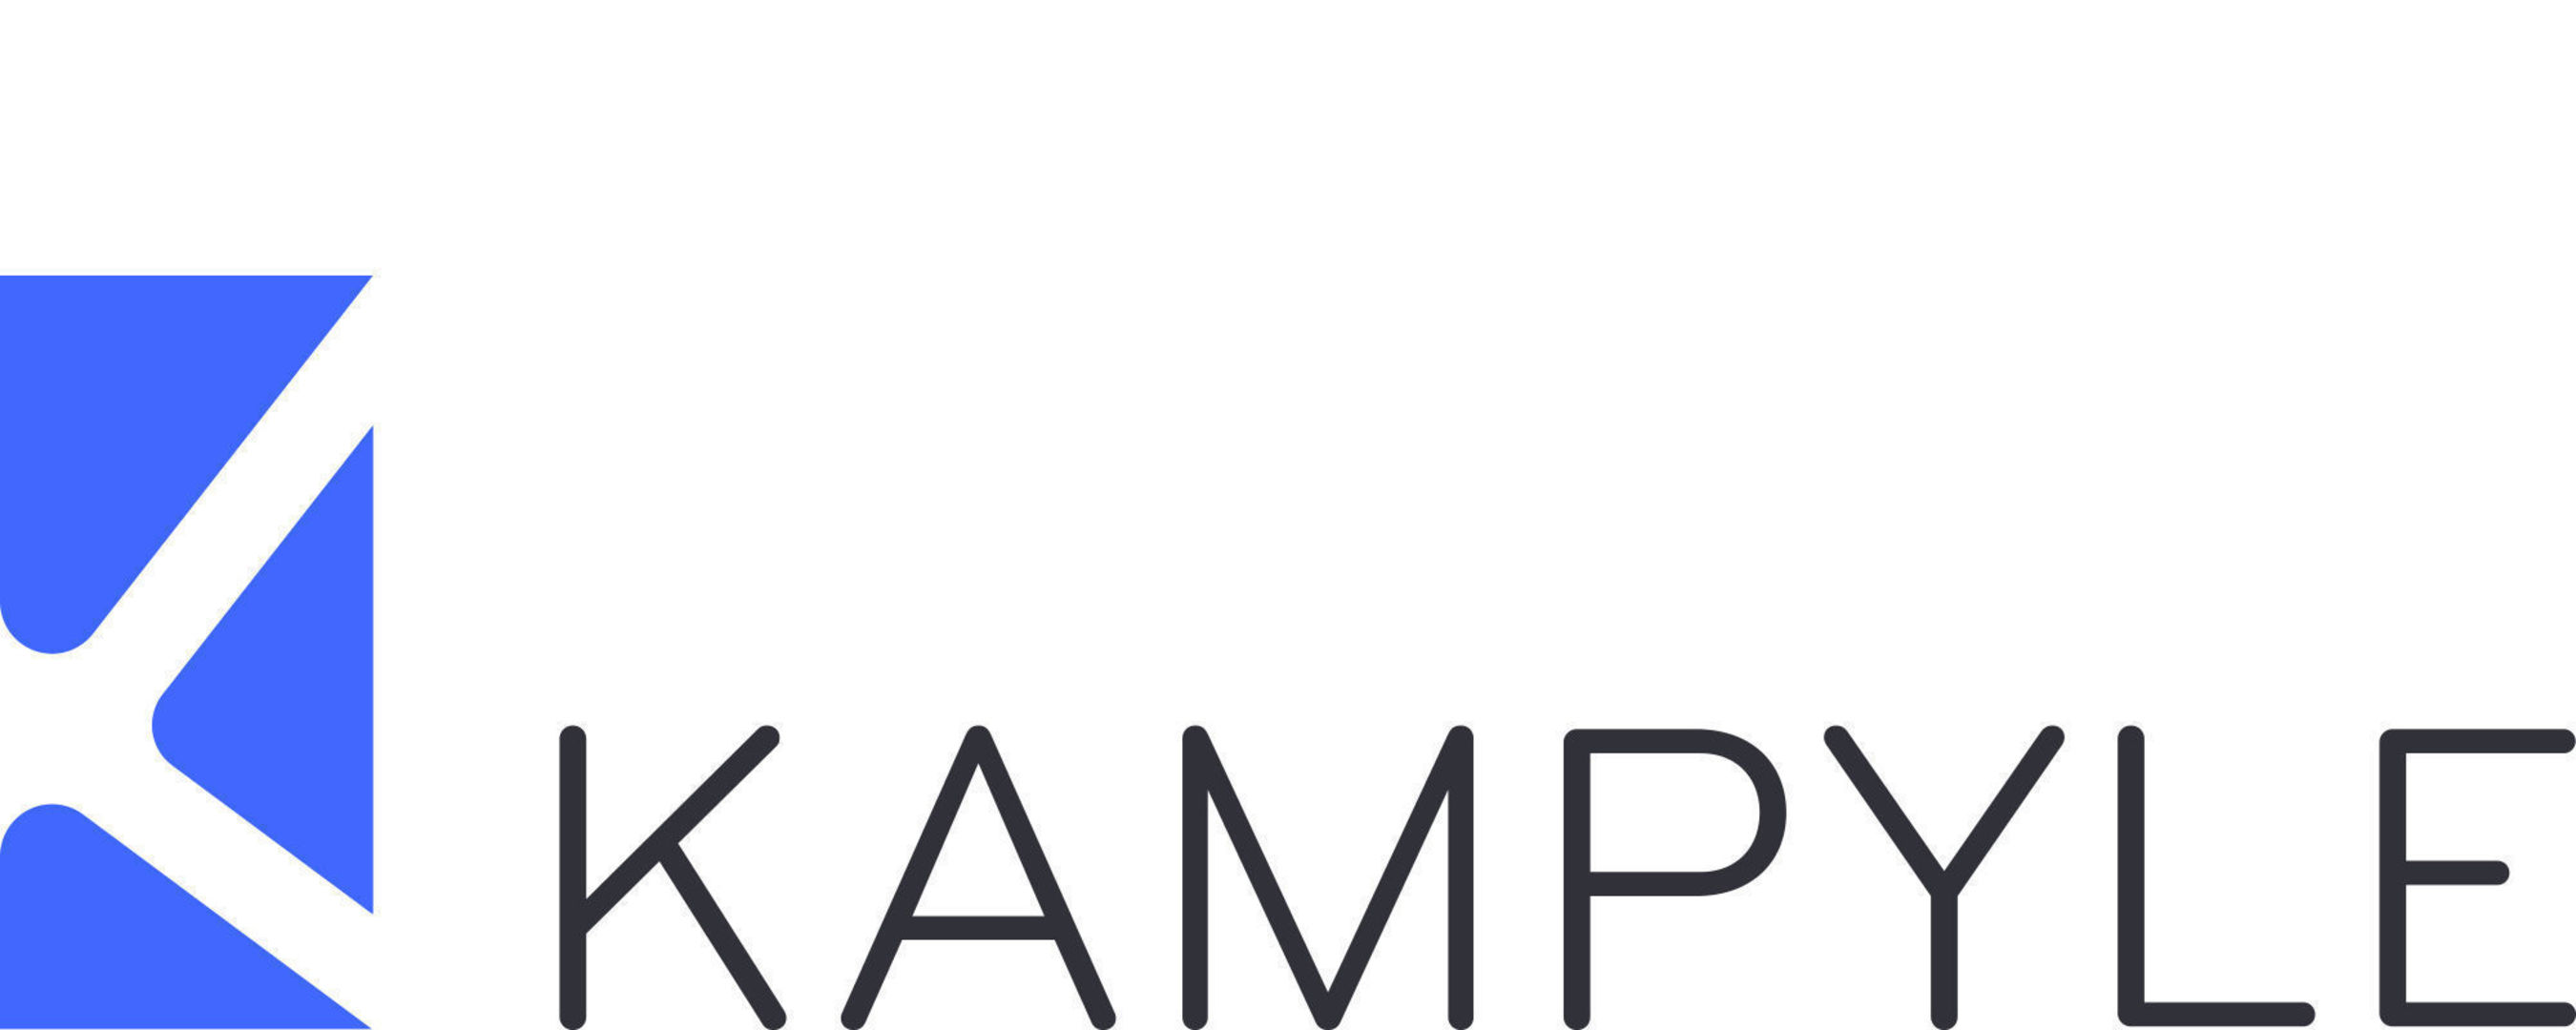 Kampyle logo (PRNewsFoto/Kampyle)